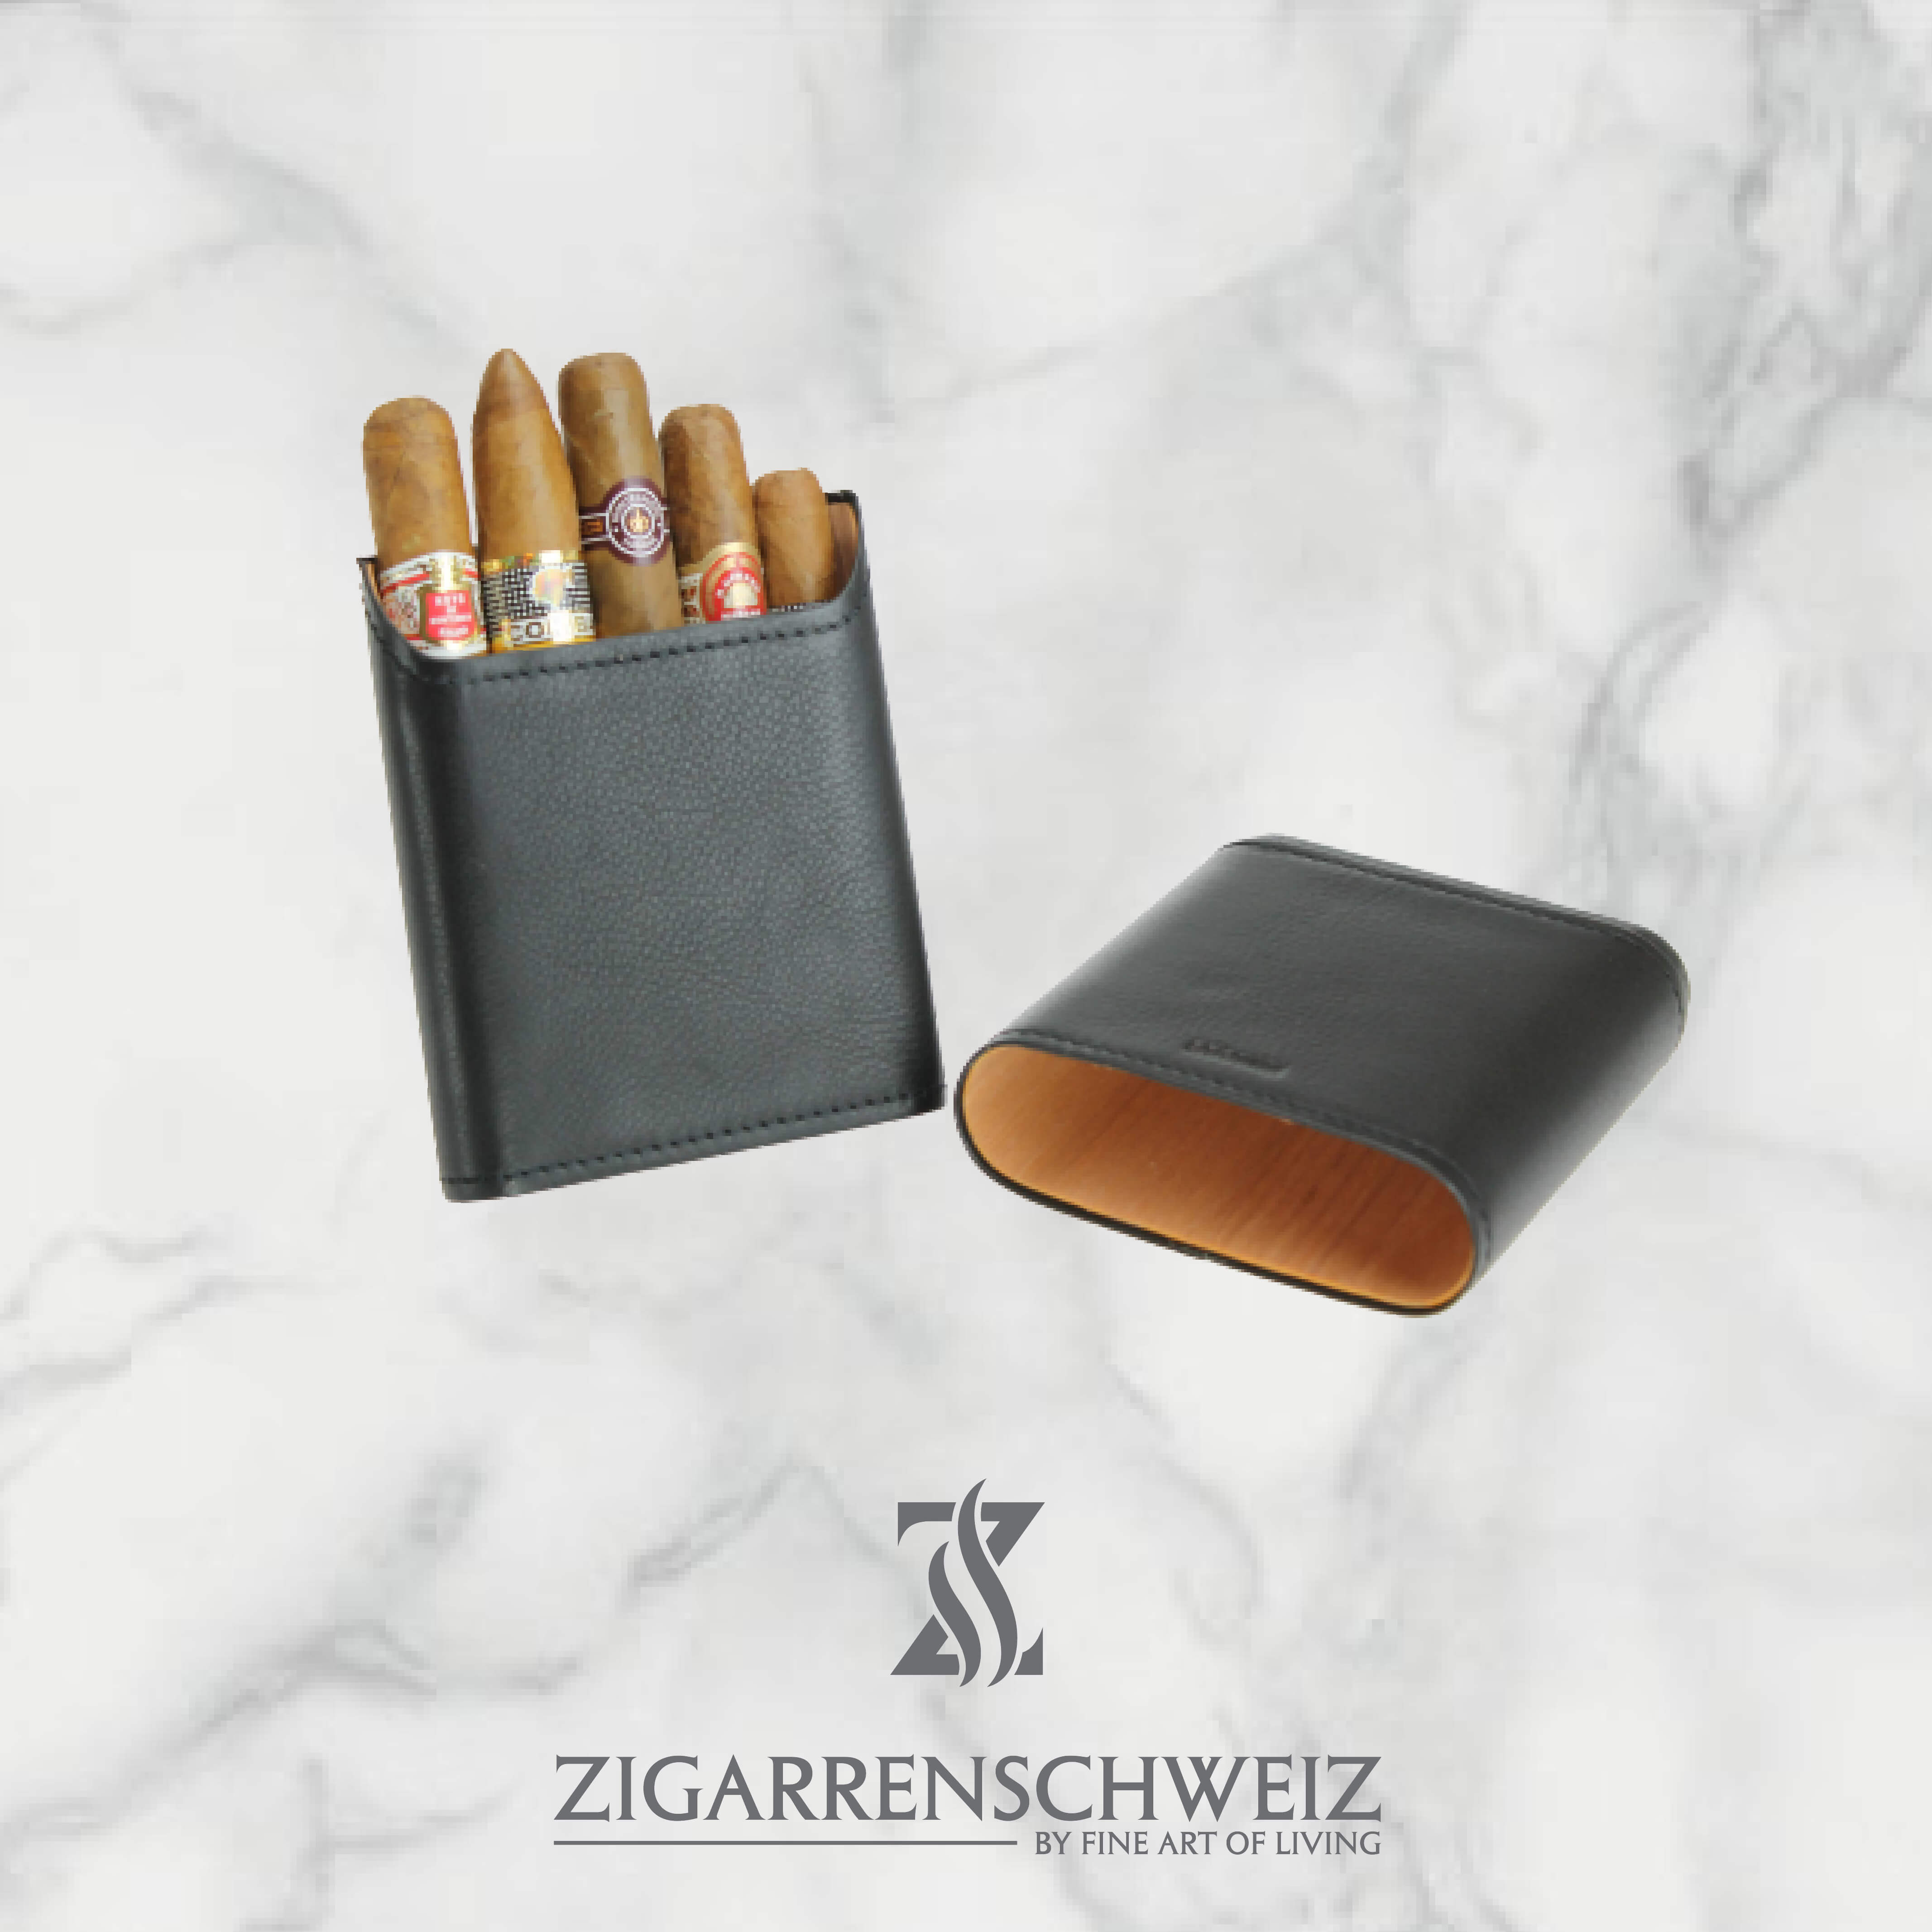 Adorini Zigarrenetui, Material: Echtleder, Kapazität: 3-5 Zigarren, Farbe: schwarz, geöffnet